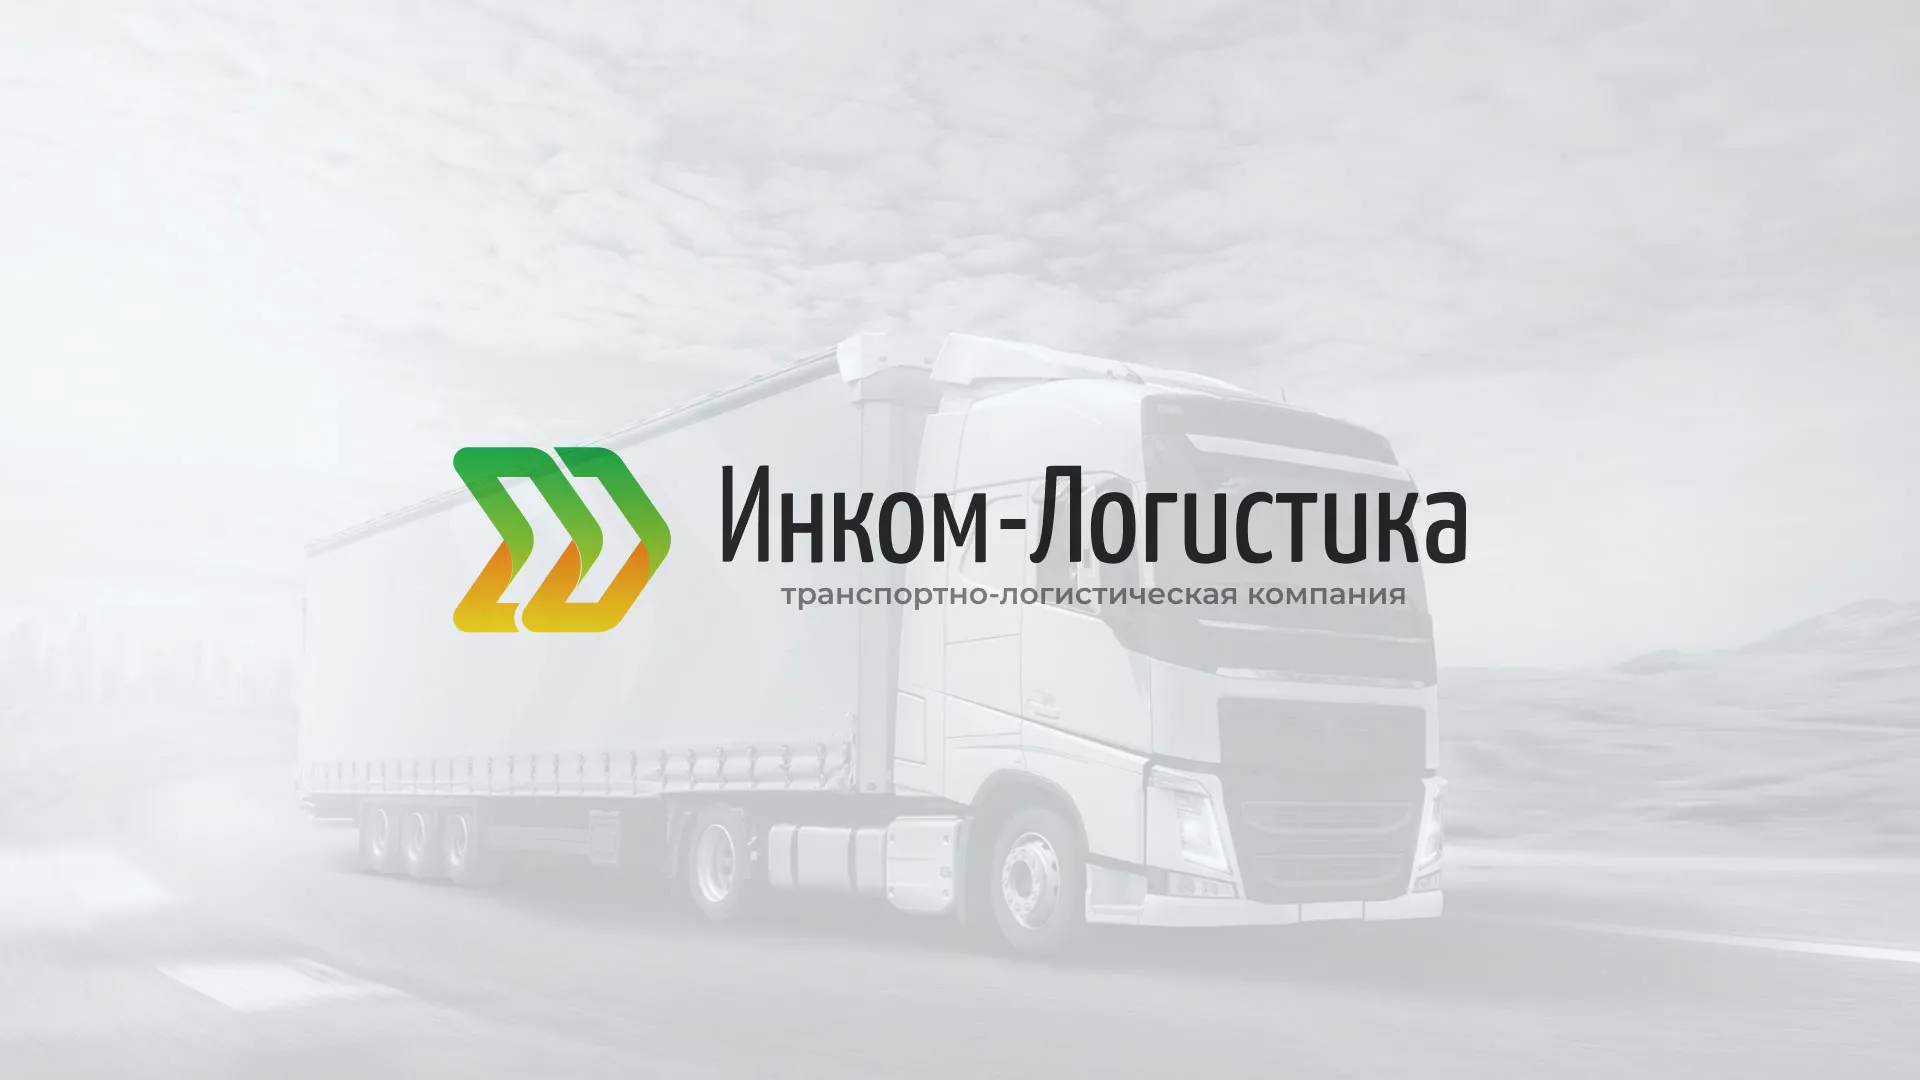 Разработка логотипа и сайта компании «Инком-Логистика» в Черняховске